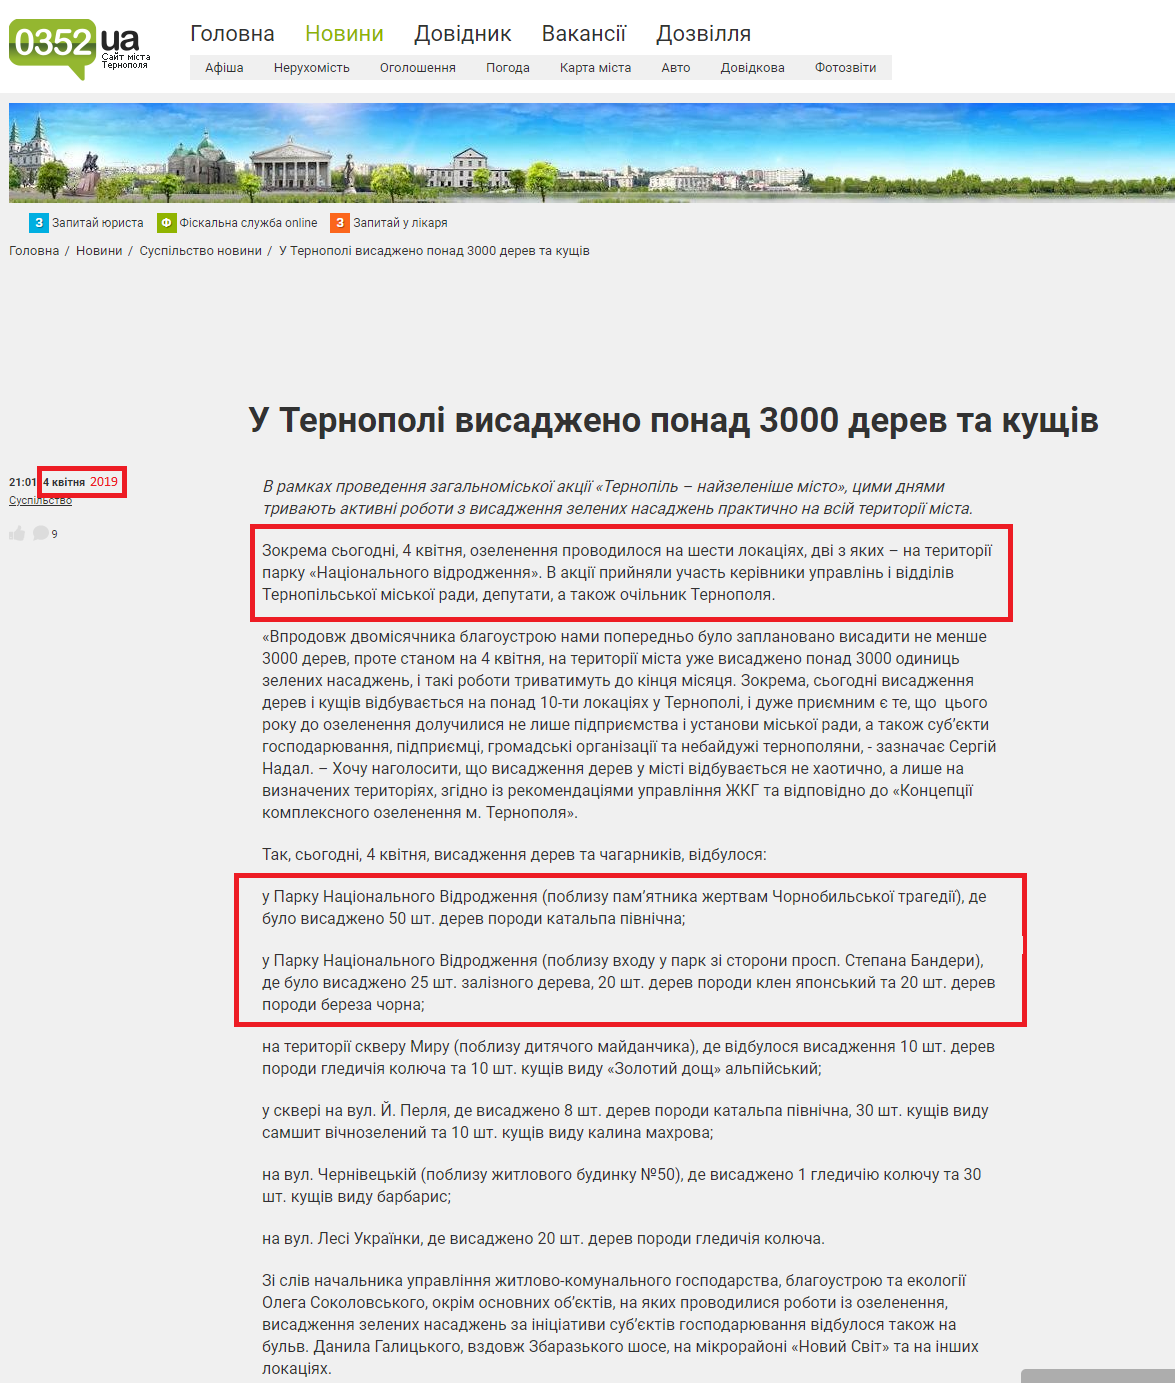 https://www.0352.ua/news/2355242/u-ternopoli-visadzeno-ponad-3000-derev-ta-kusiv